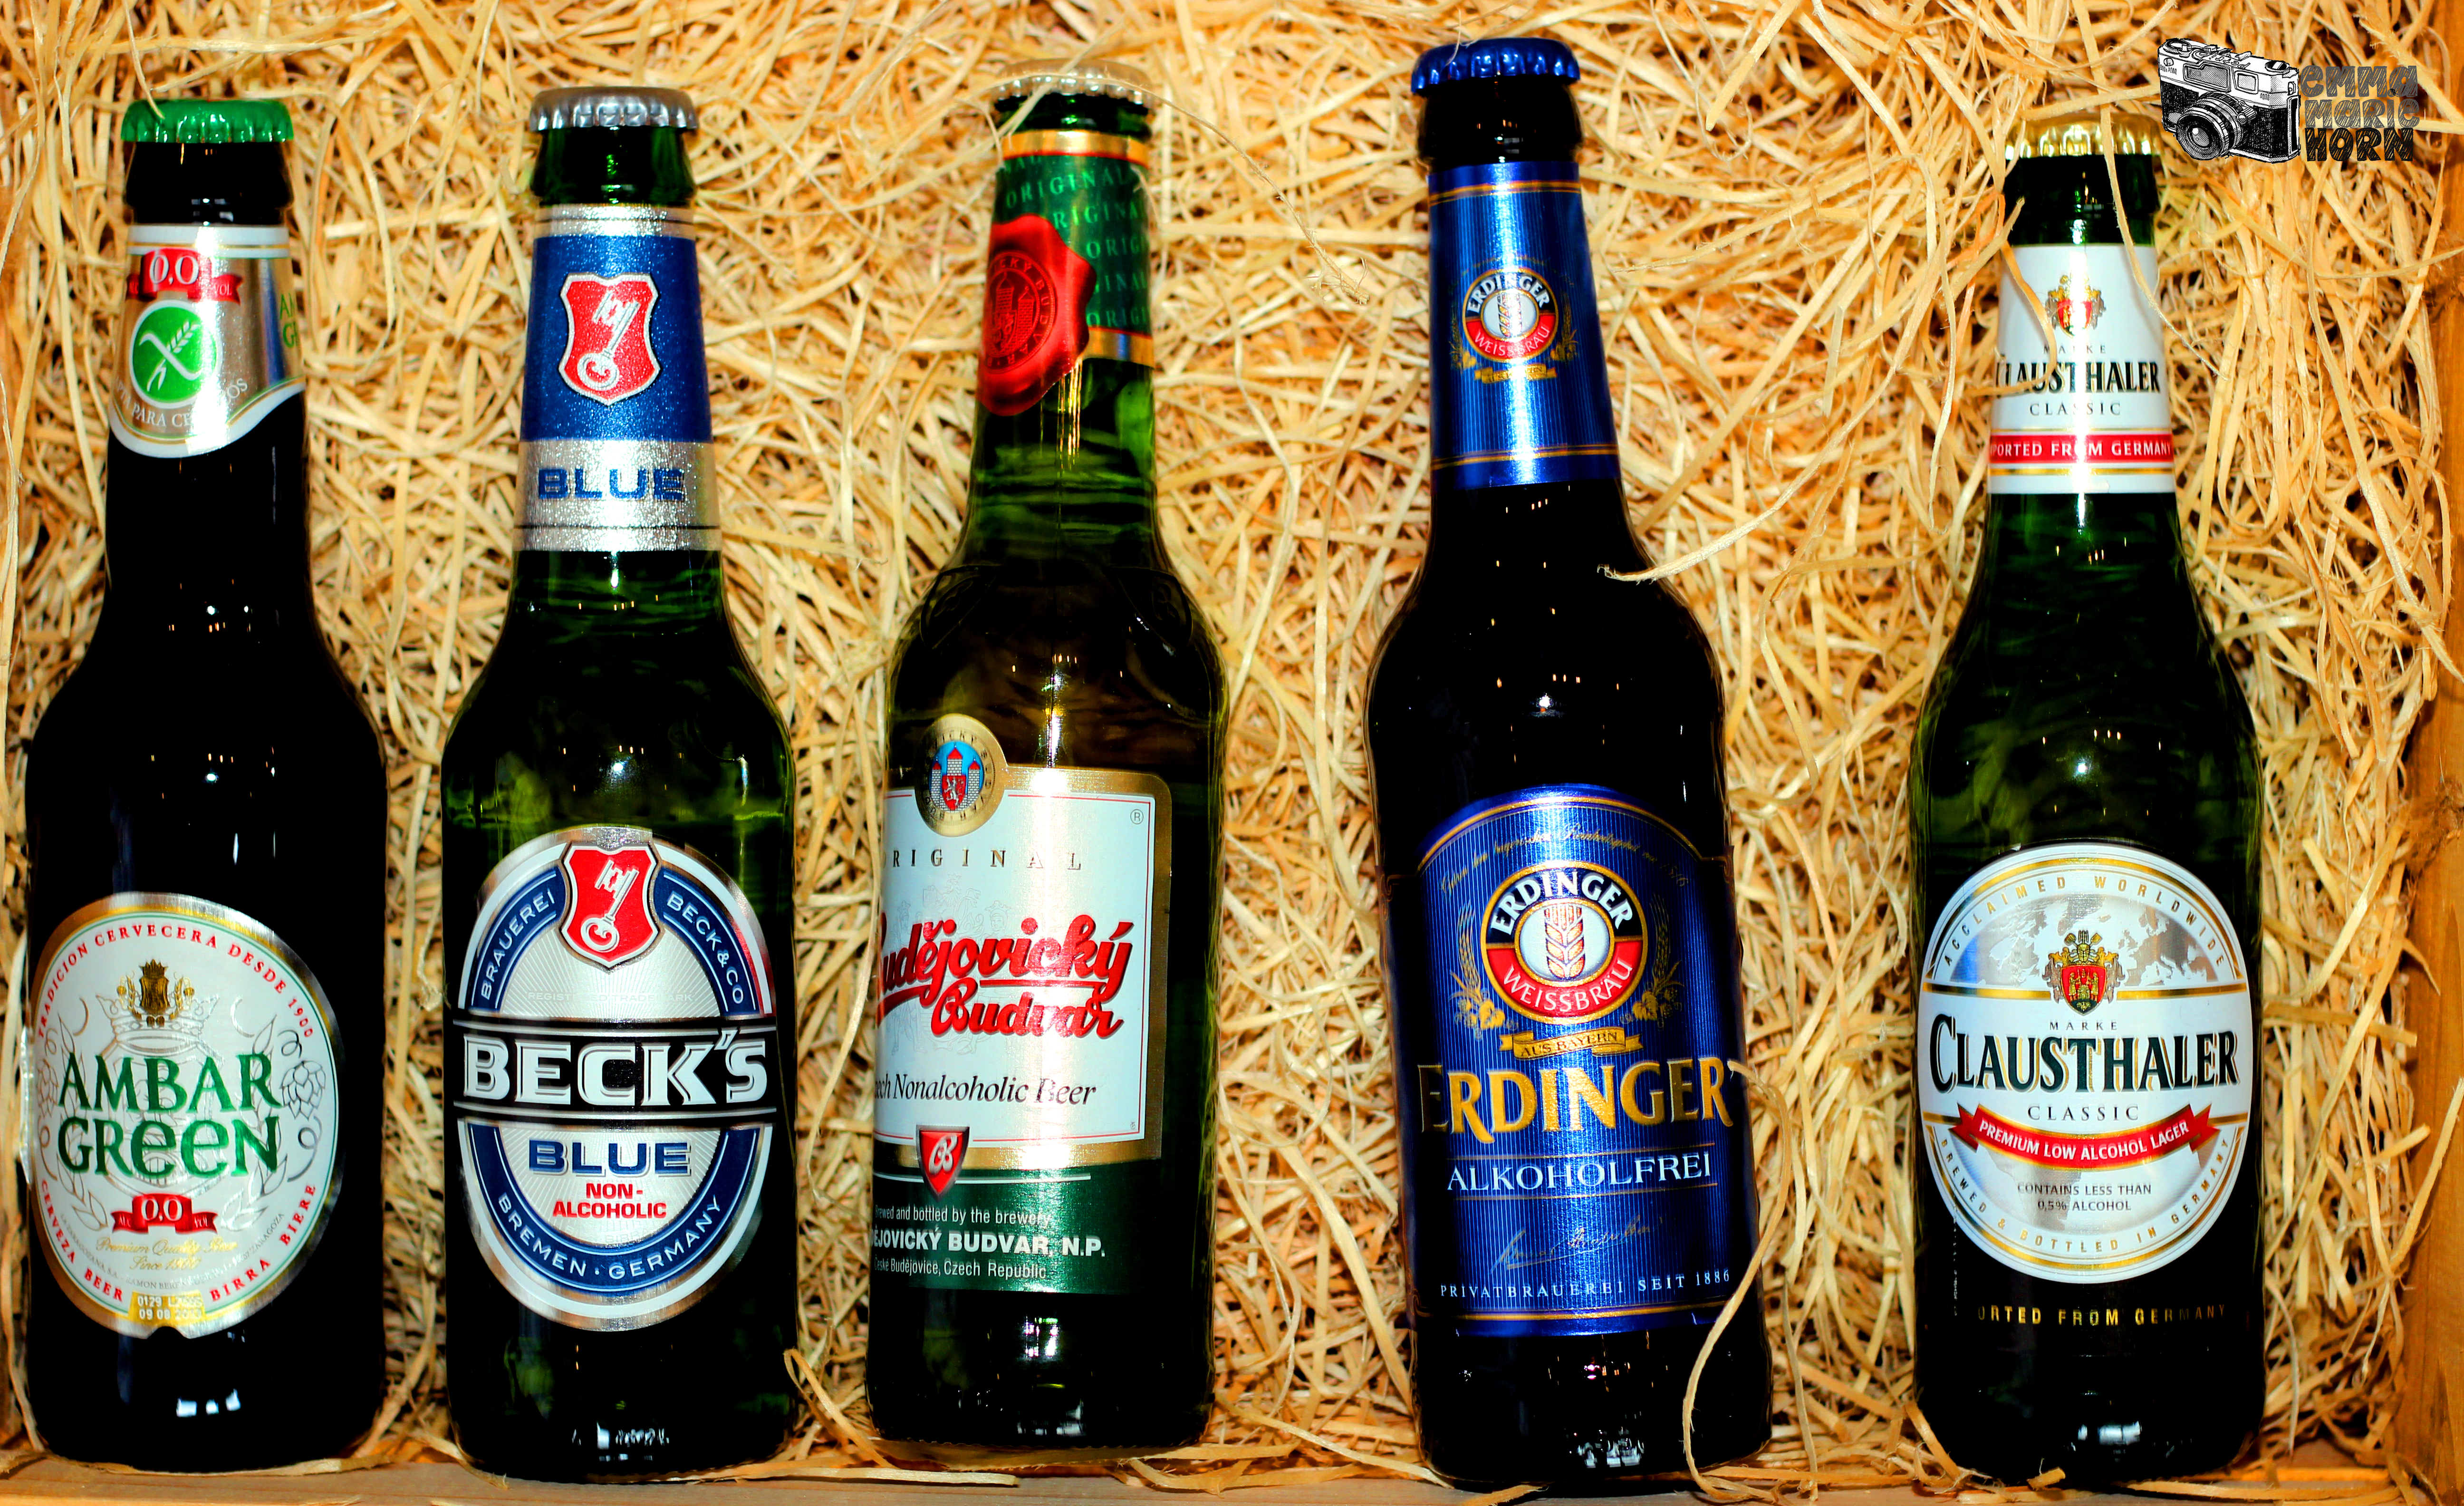 German non-alcoholic beers: Amber Green (gluten free), Beck's Blue, Erdinger Weißbier, Clausthaler.